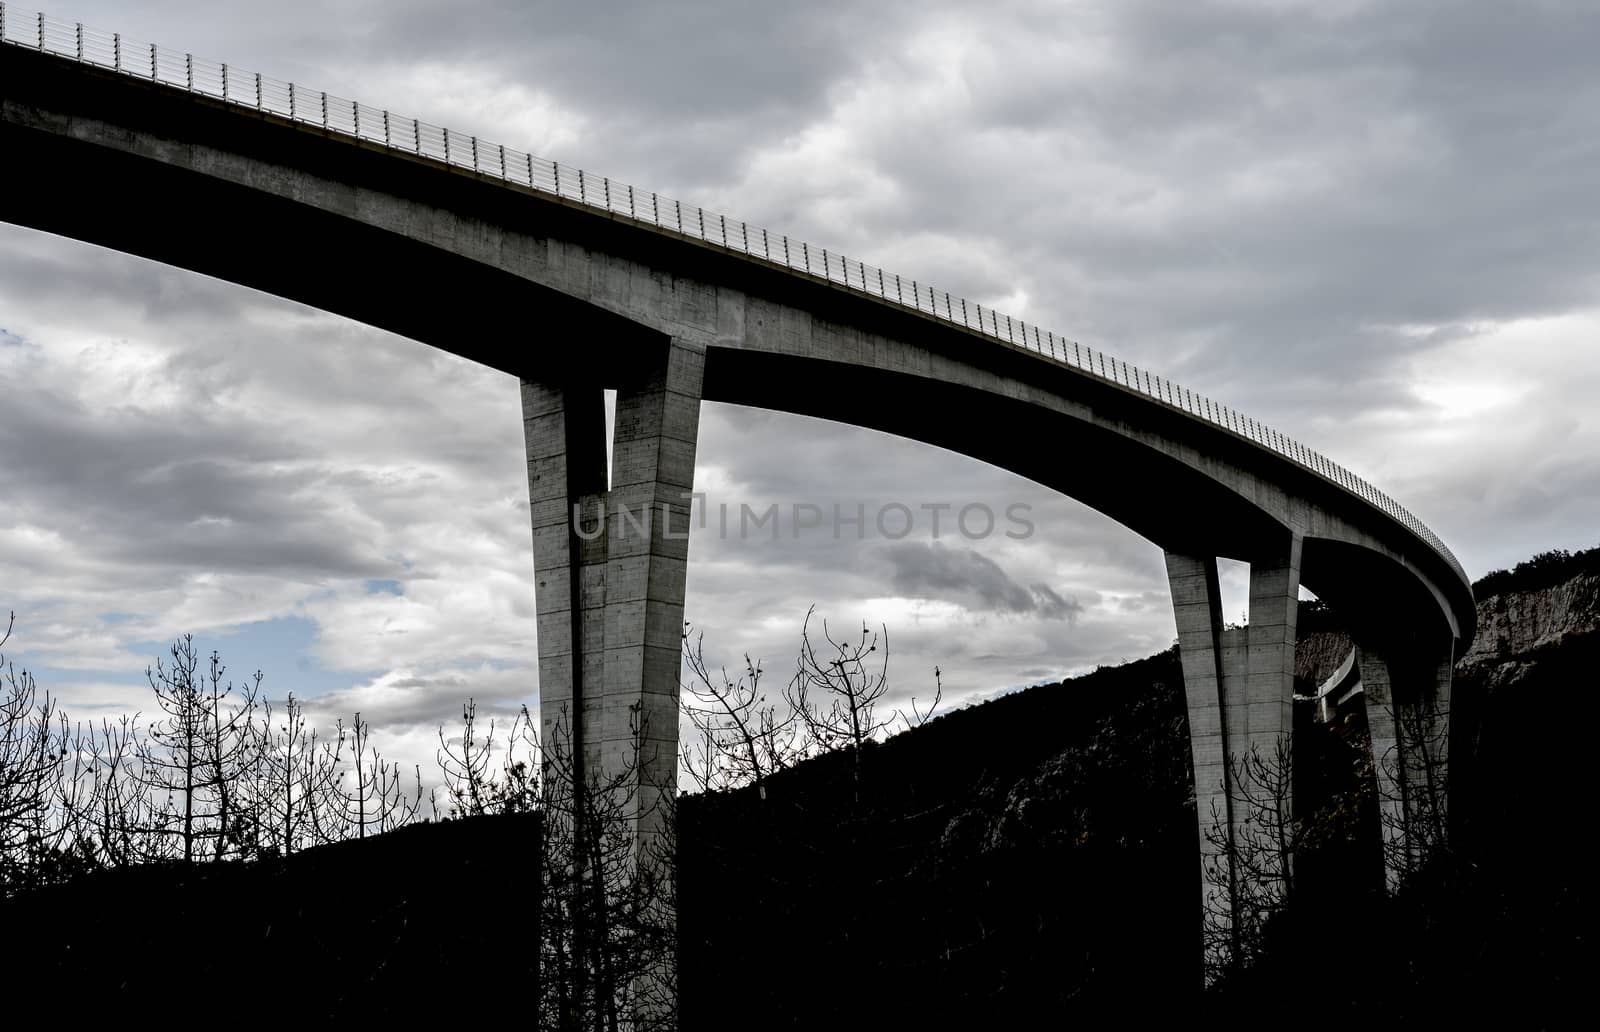 Dark highway overpass silhuette made in a program.